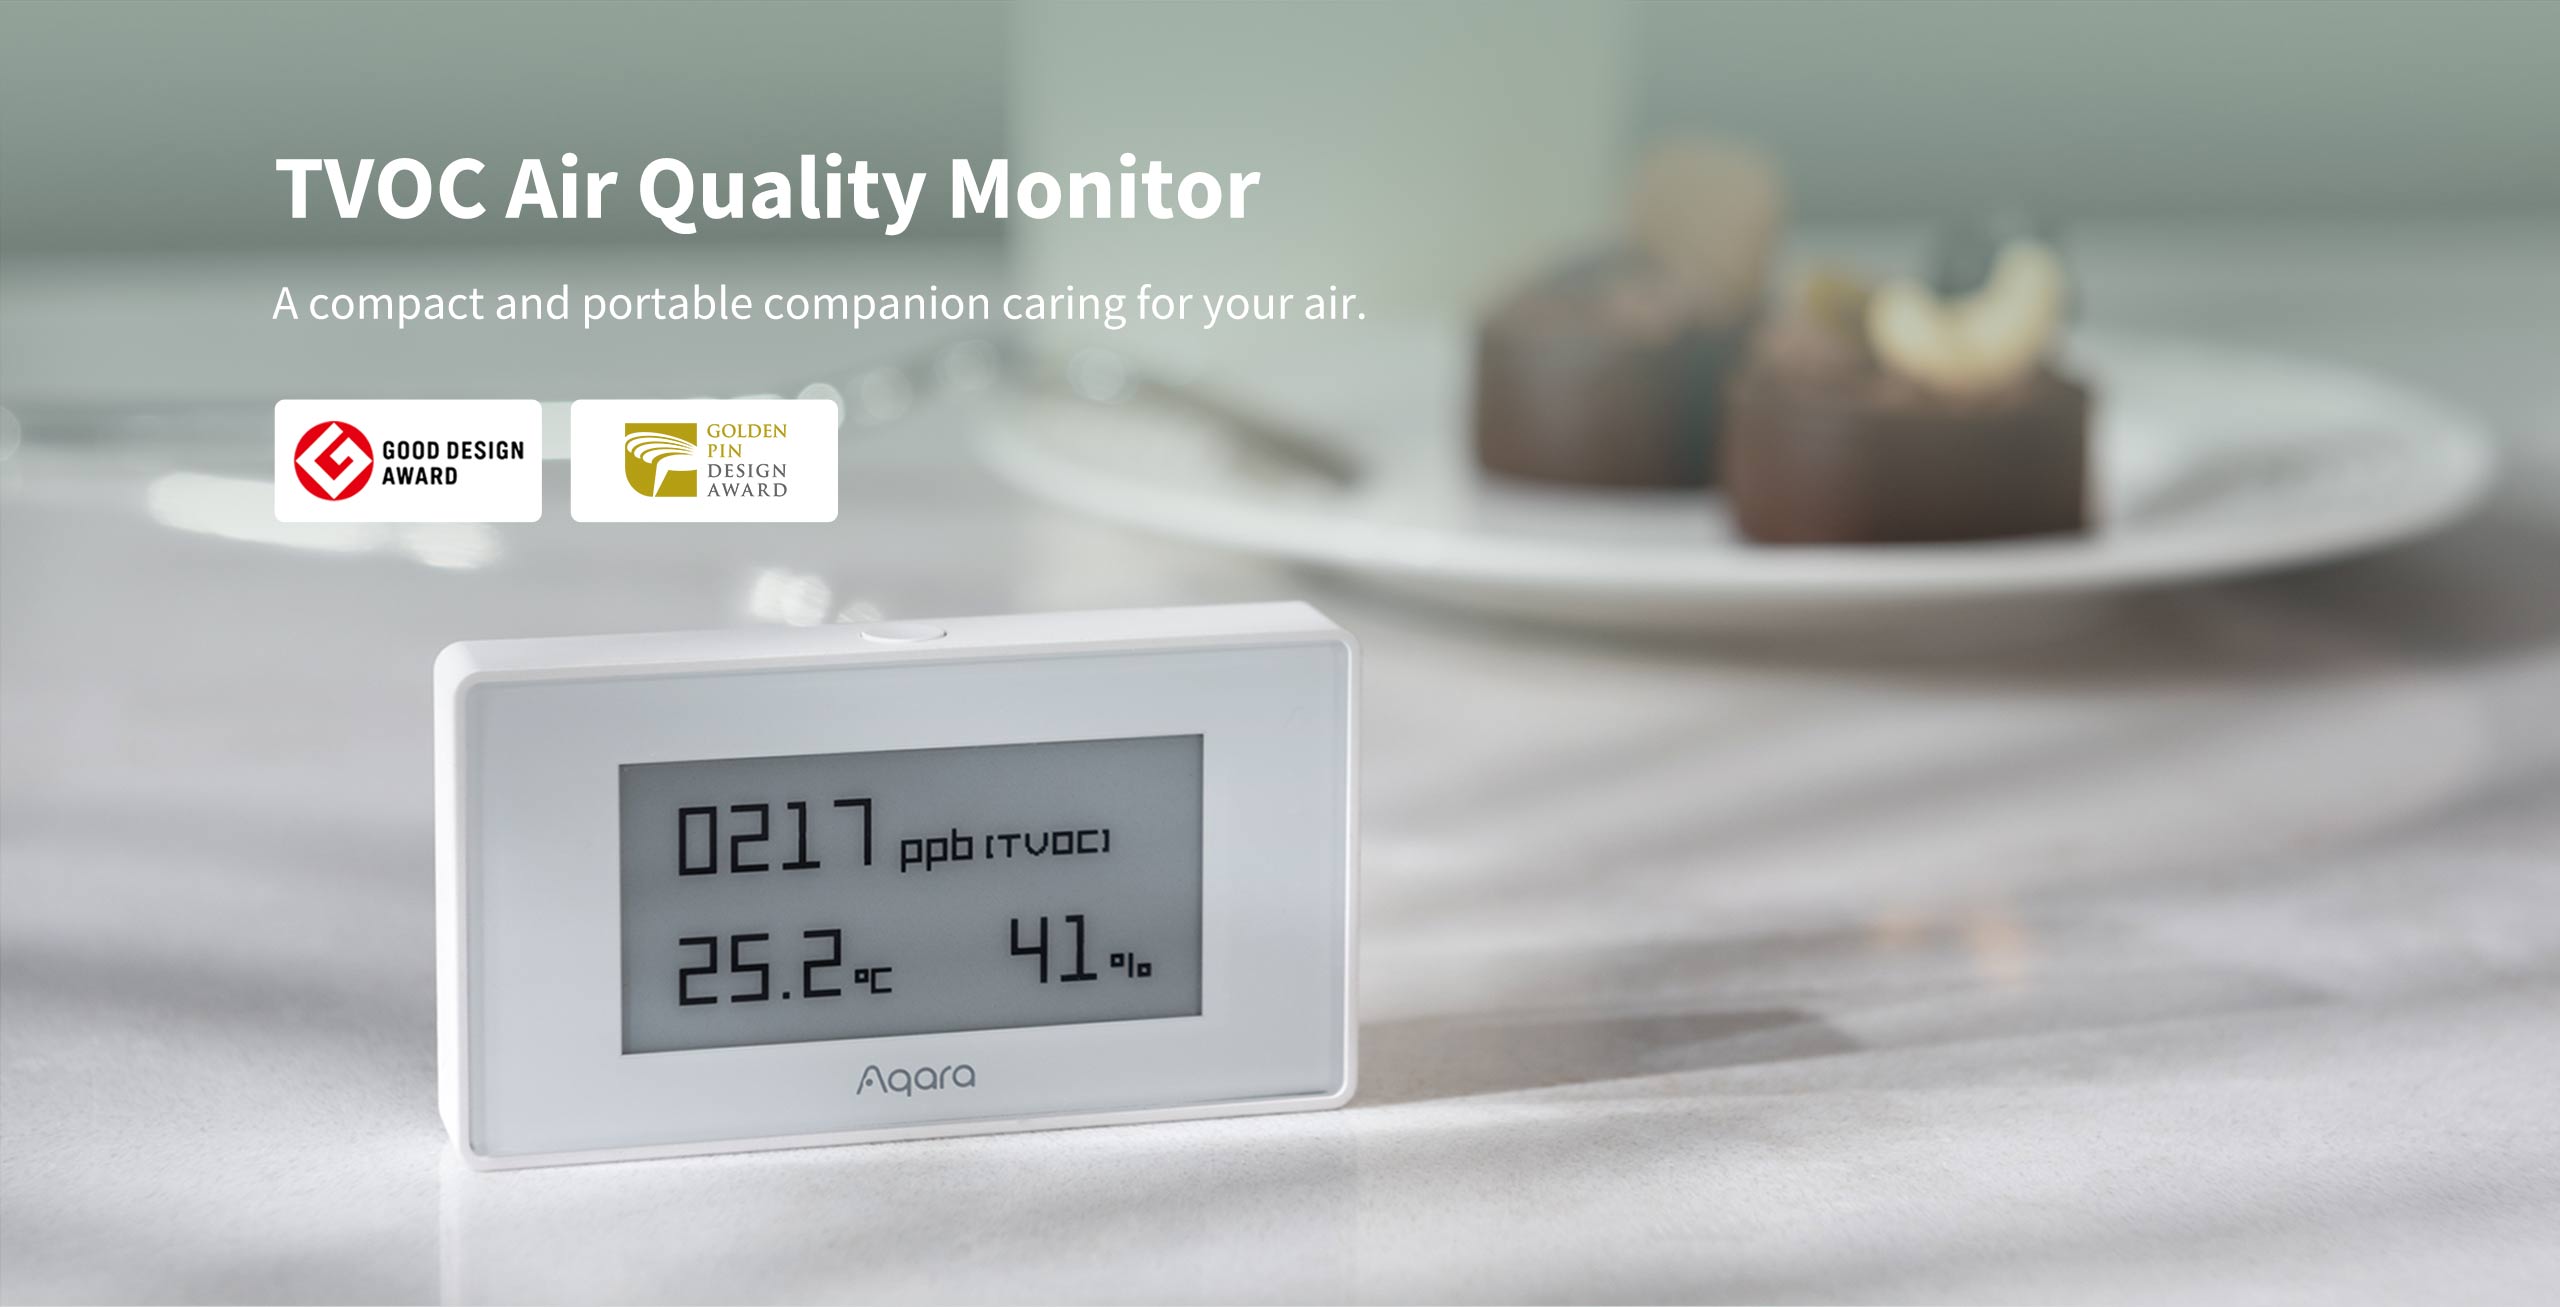 TVOC Air Quality Monitor pc 01 Air Quality Monitor with Temperature and Humidity Sensor - Aqara